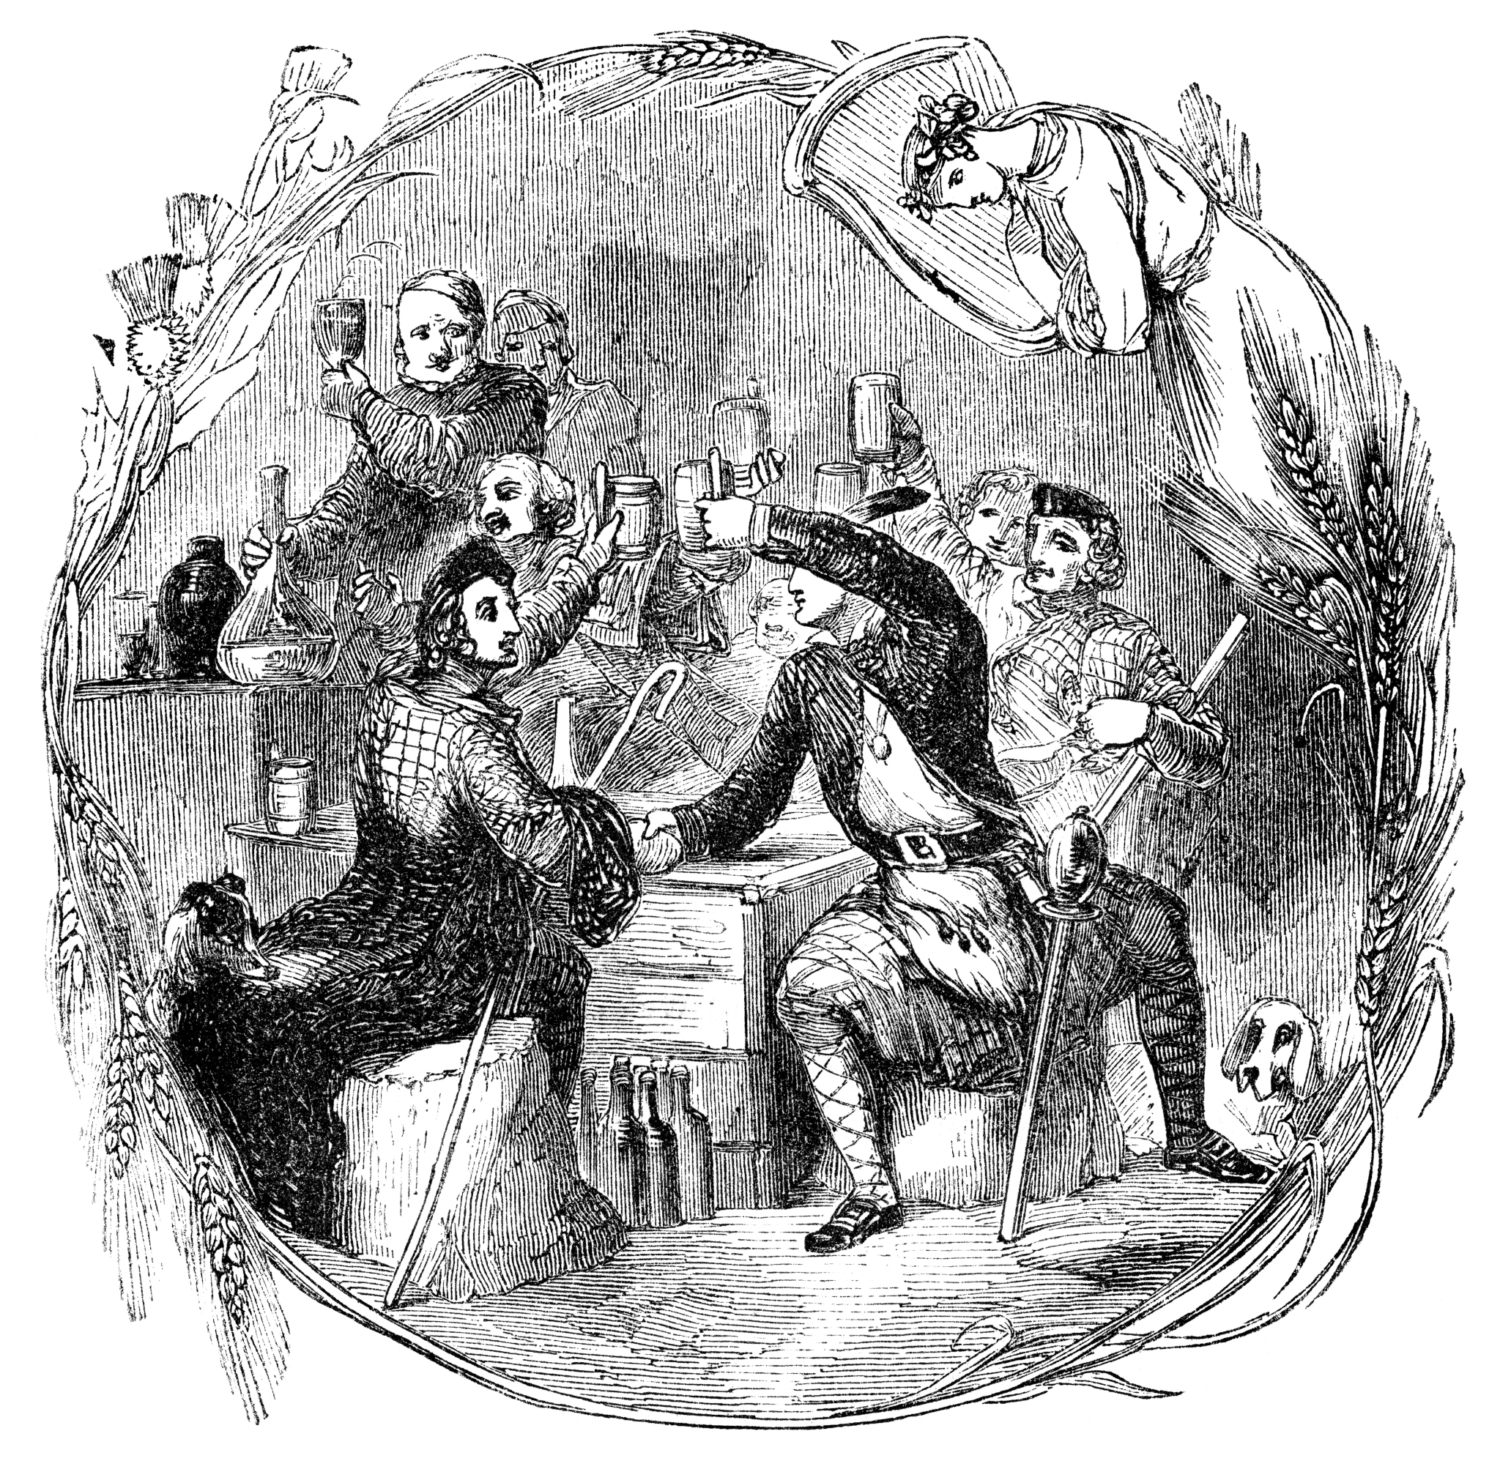 An old etched illustration of a Burns Night celebration.